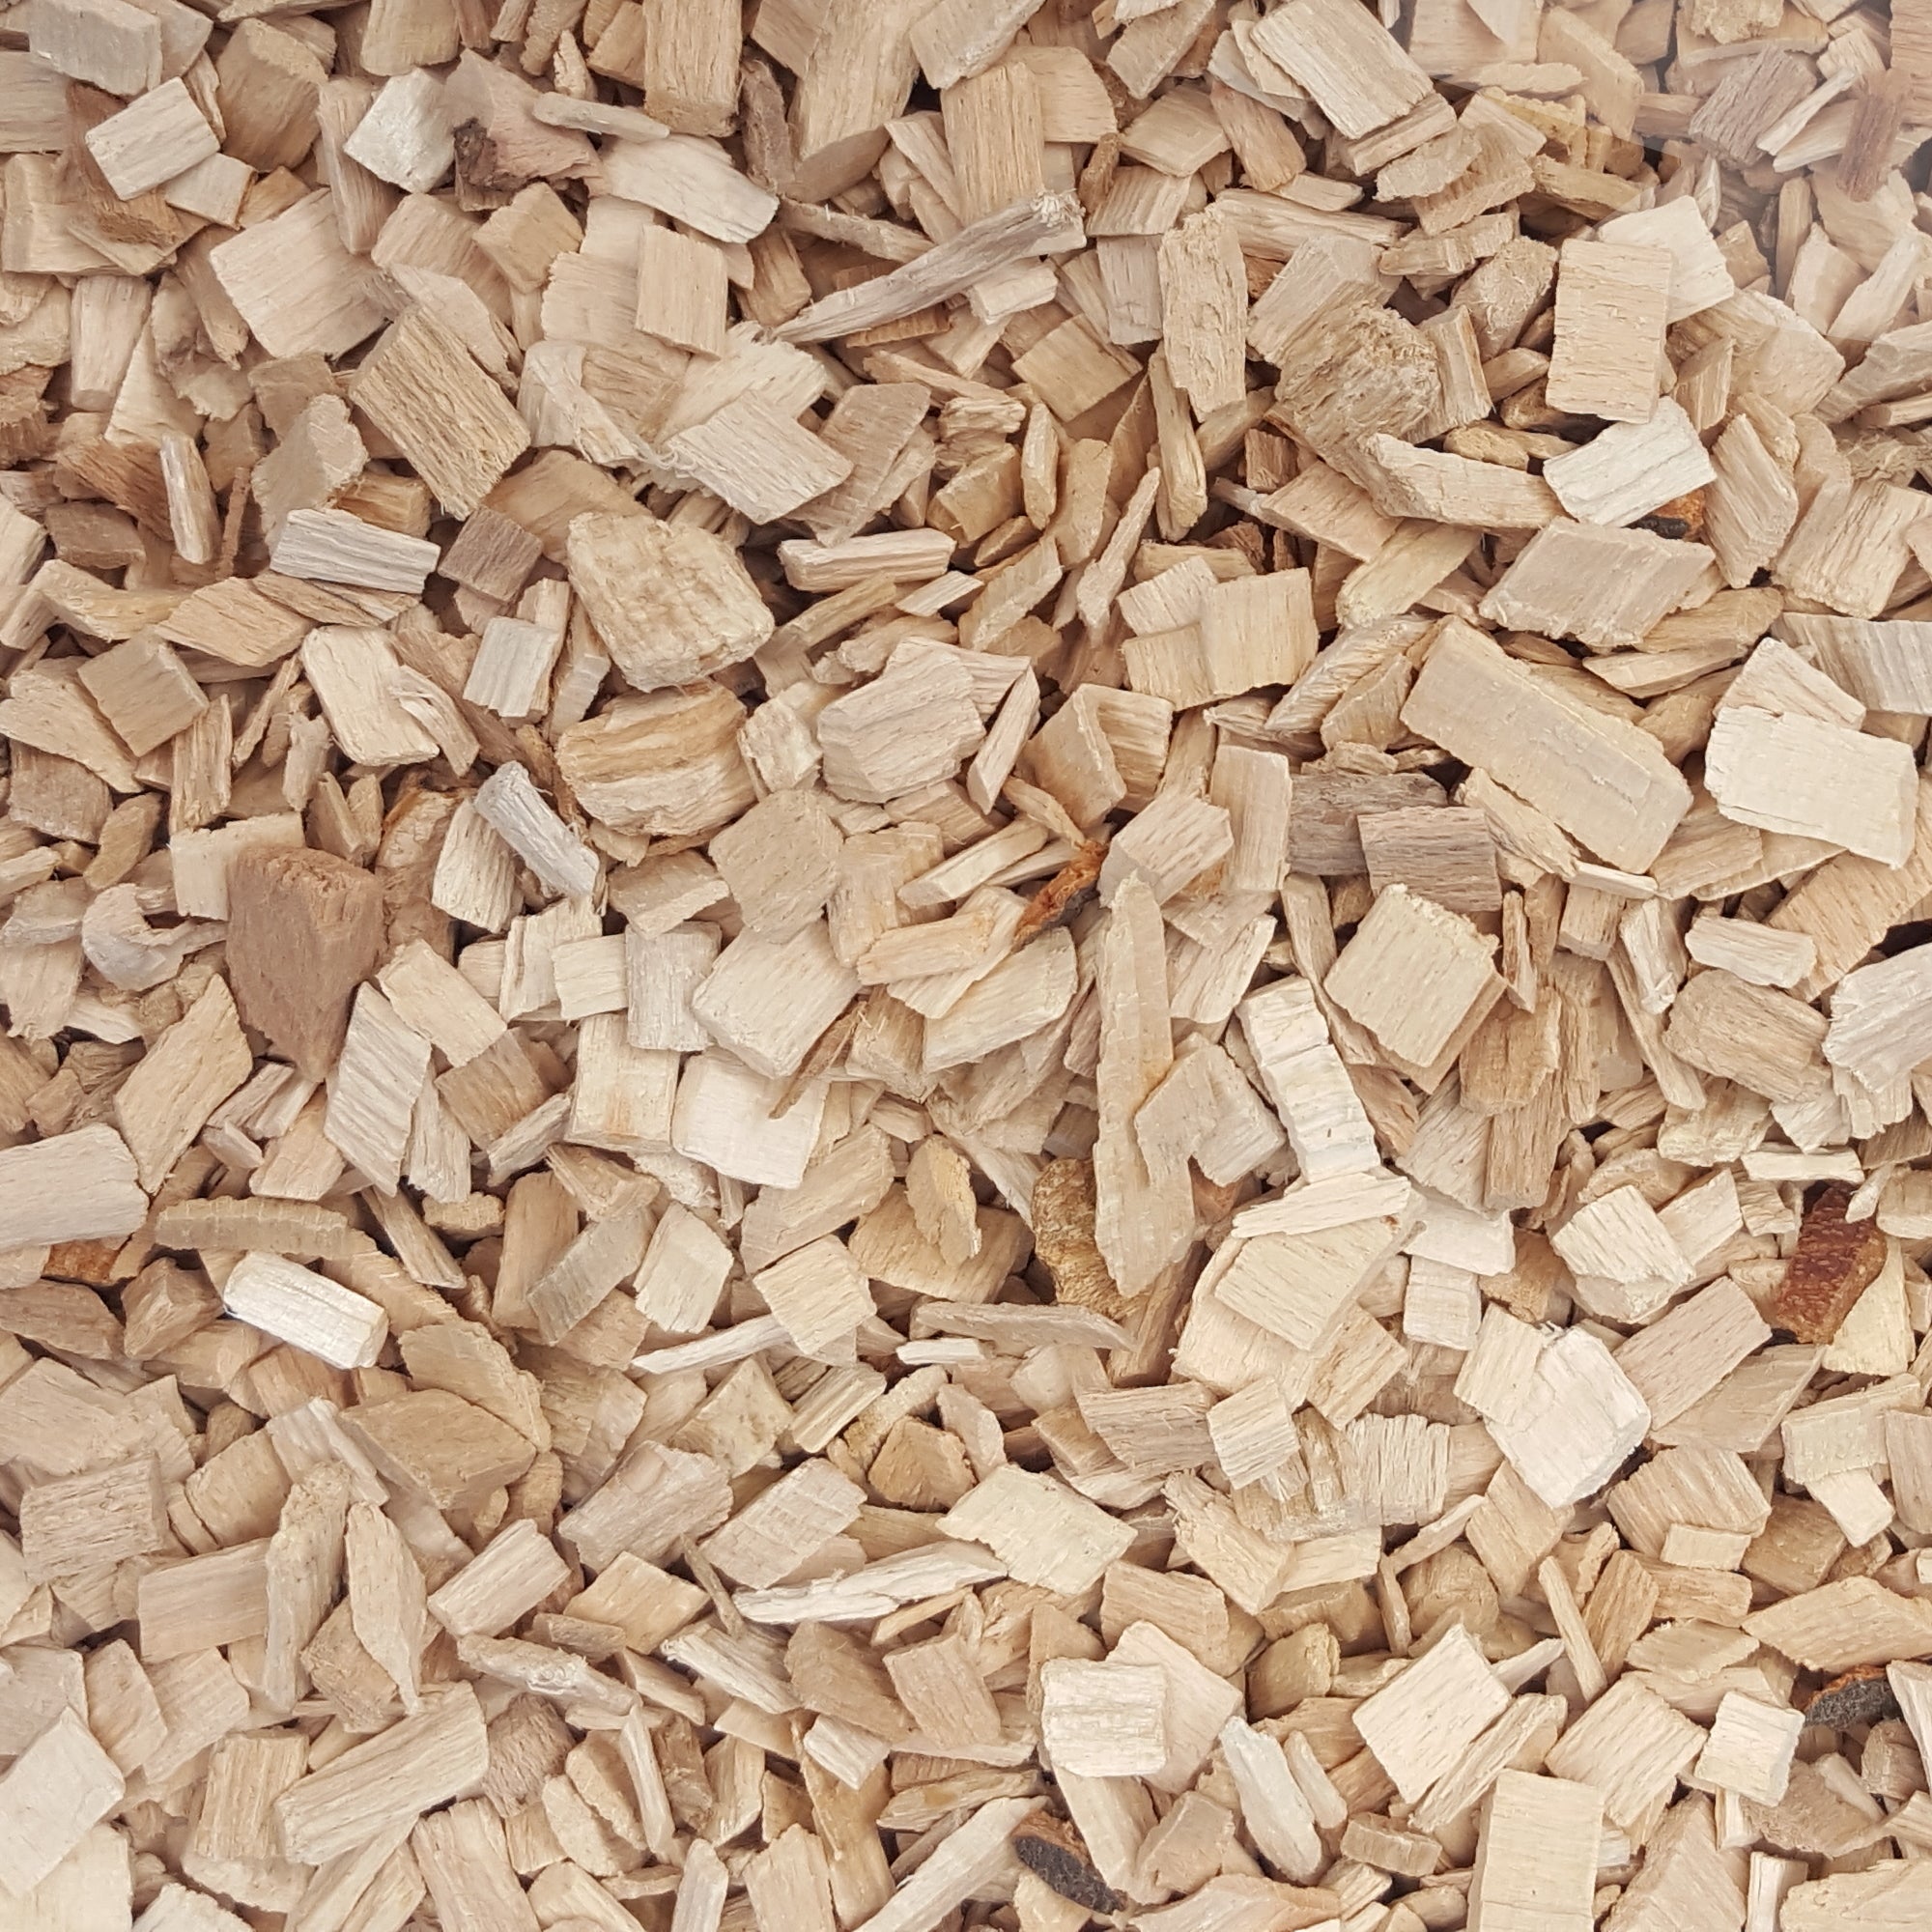 Beechwood Bedding Wood Chips Coarse Medium 14-16mm